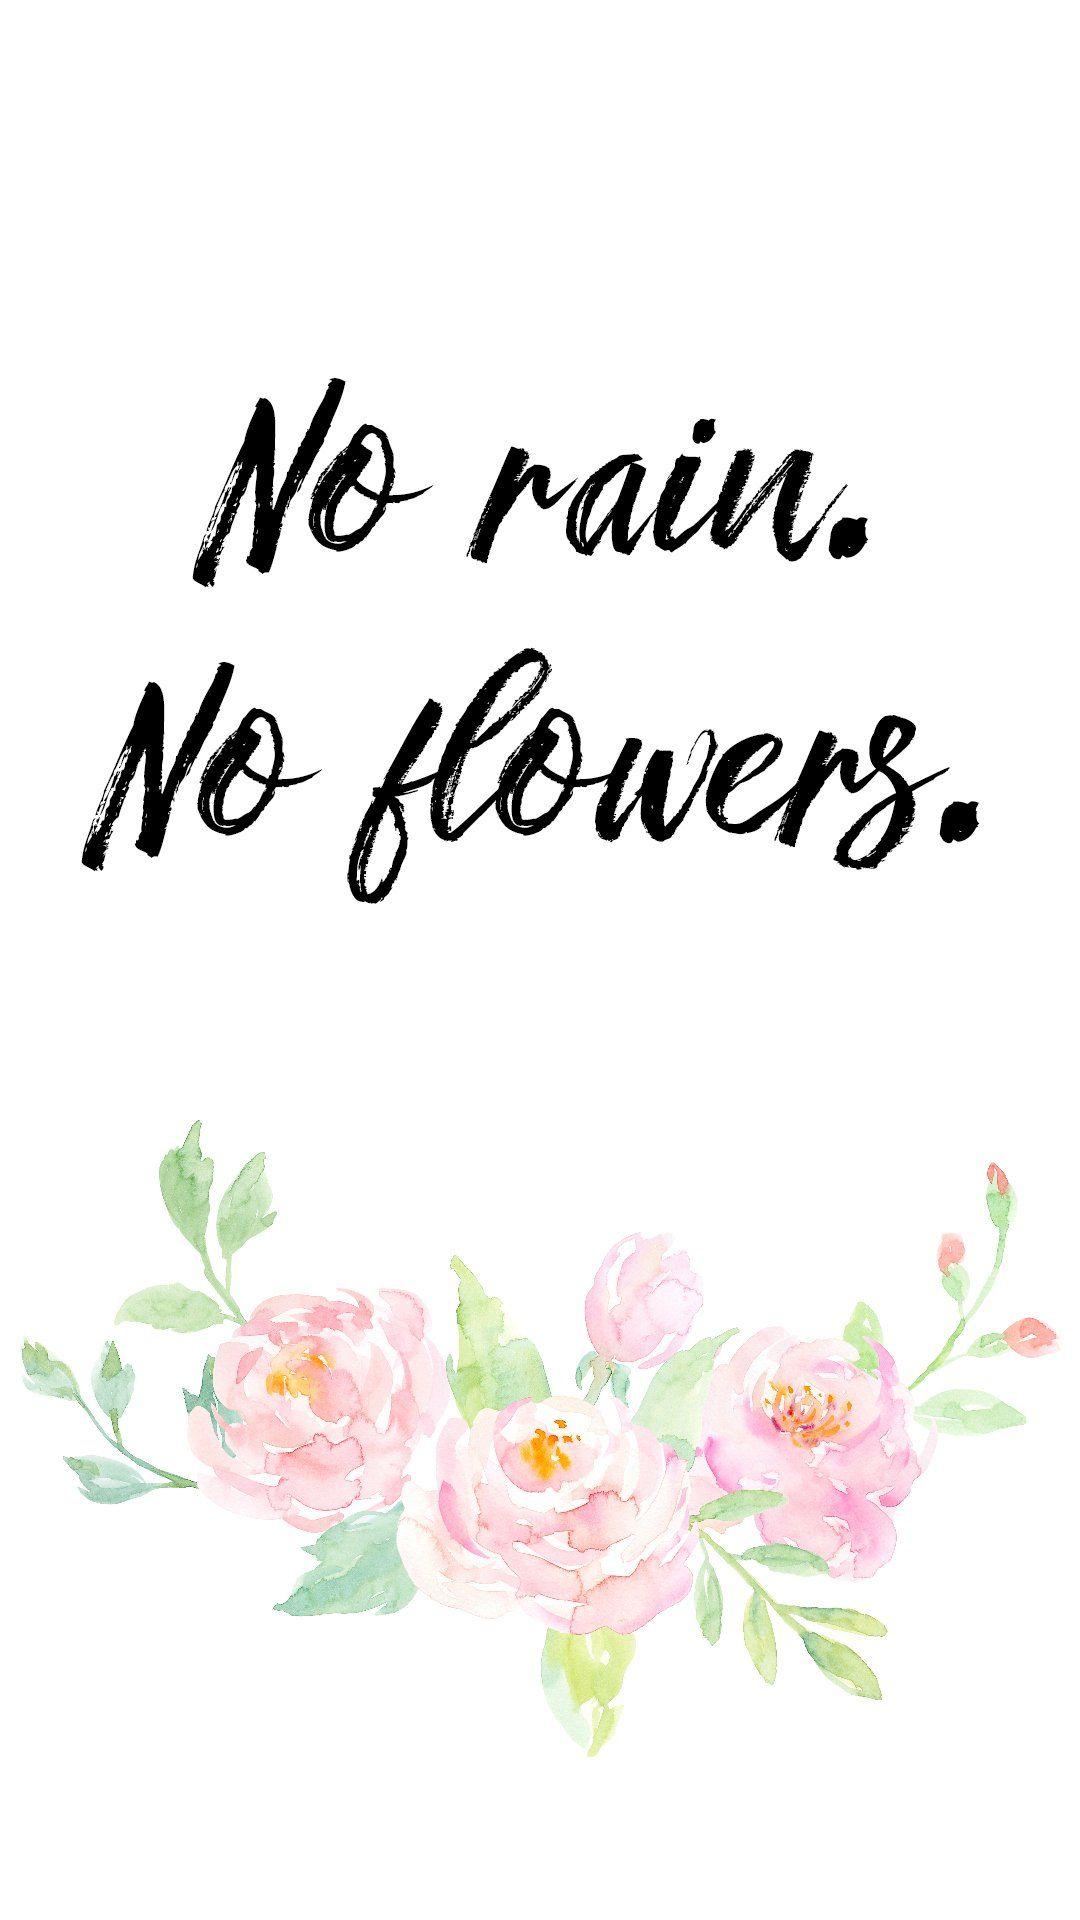 10156 No Rain Flowers Images Stock Photos  Vectors  Shutterstock